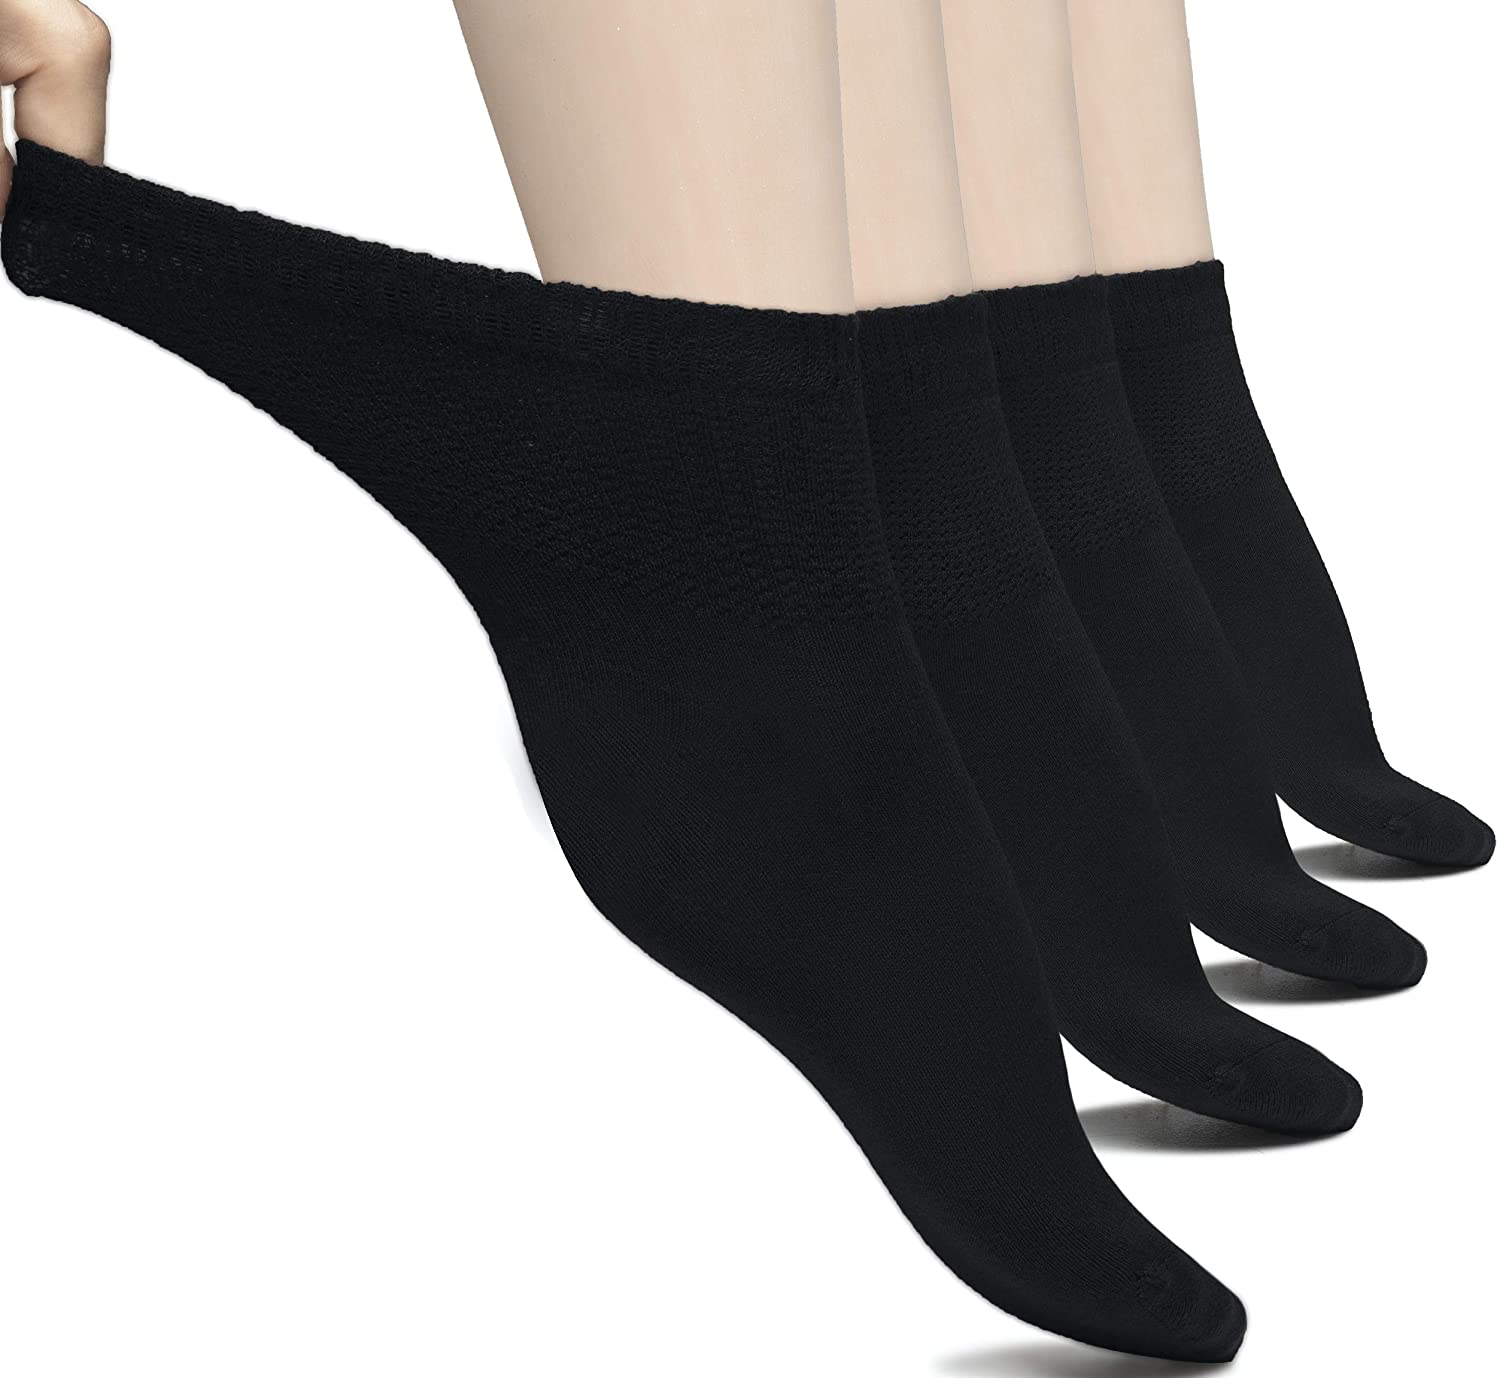 Hugh Ugoli 4 Pairs Lightweight Womens Diabetic Ankle Socks Bamboo Thin Socks Seamless Toe and Non-Binding Top